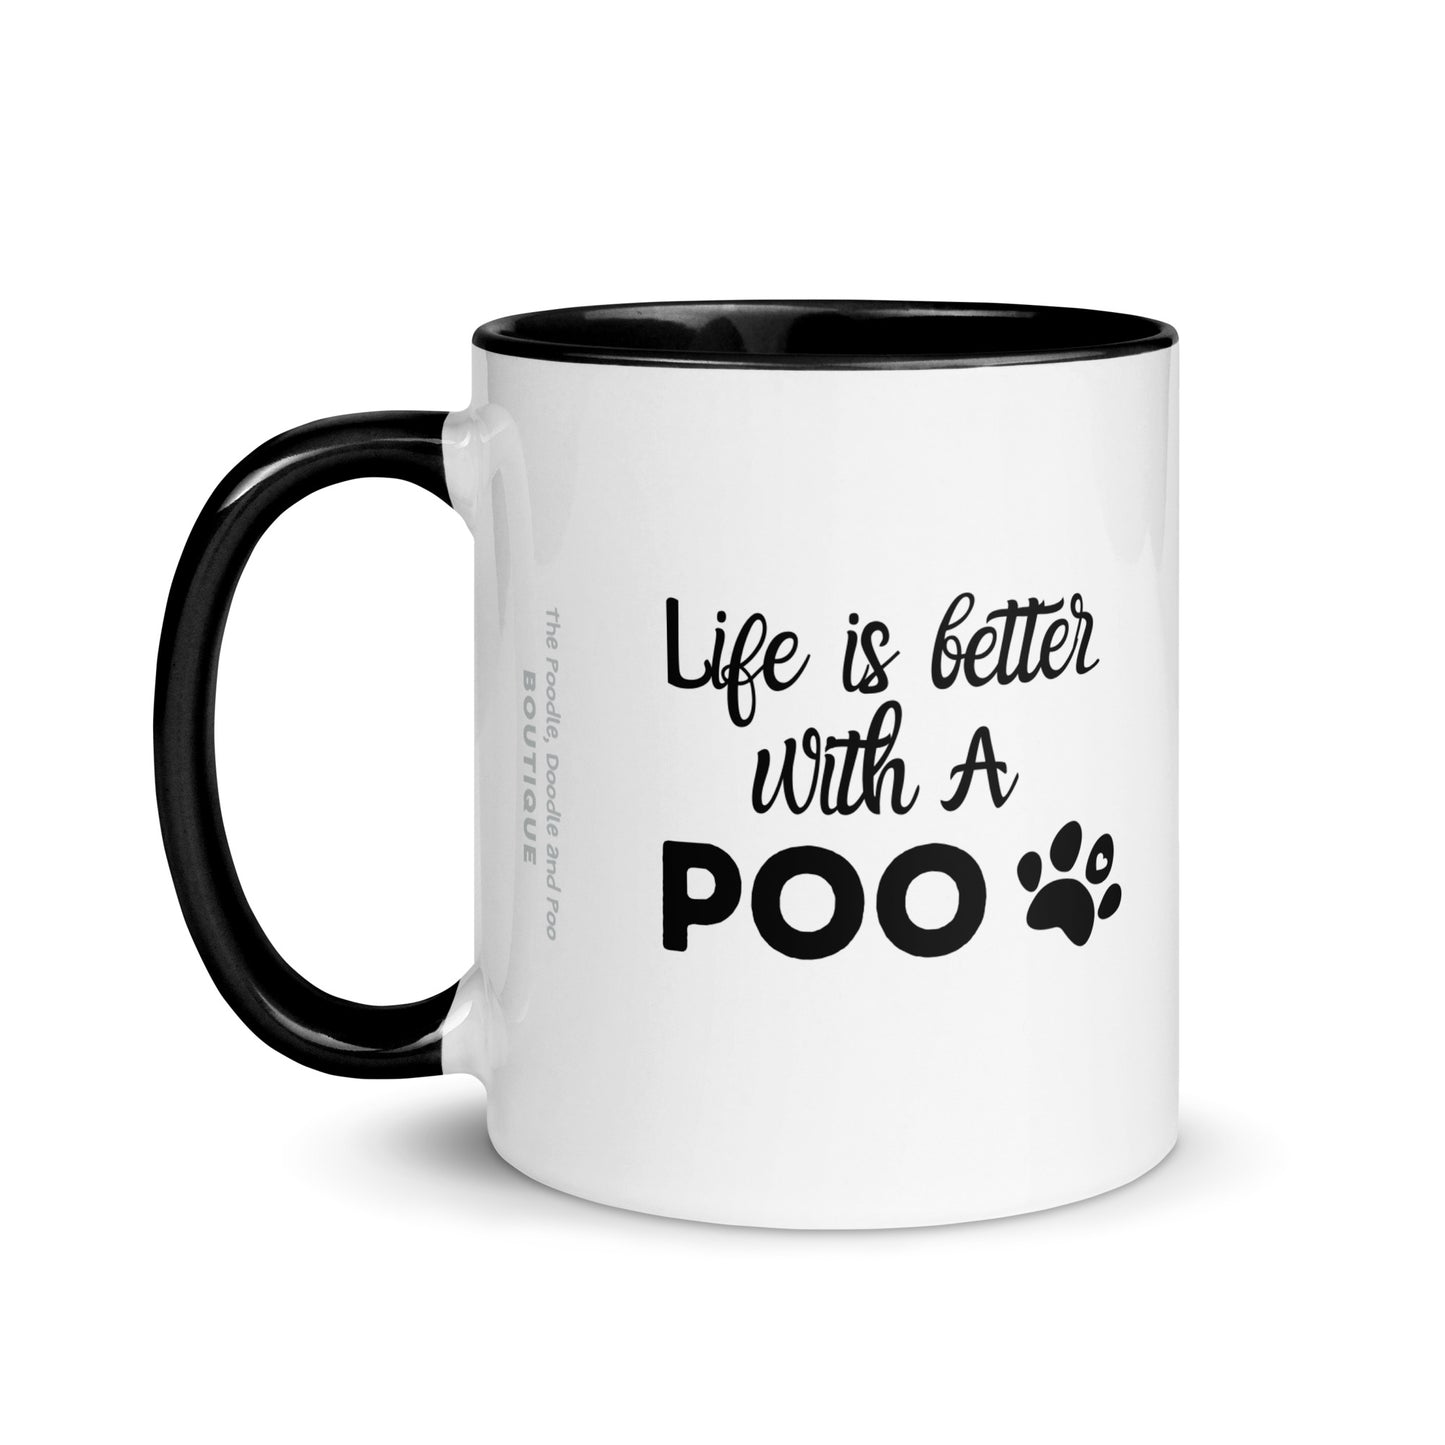 "Poo Love 2" mug with black inside